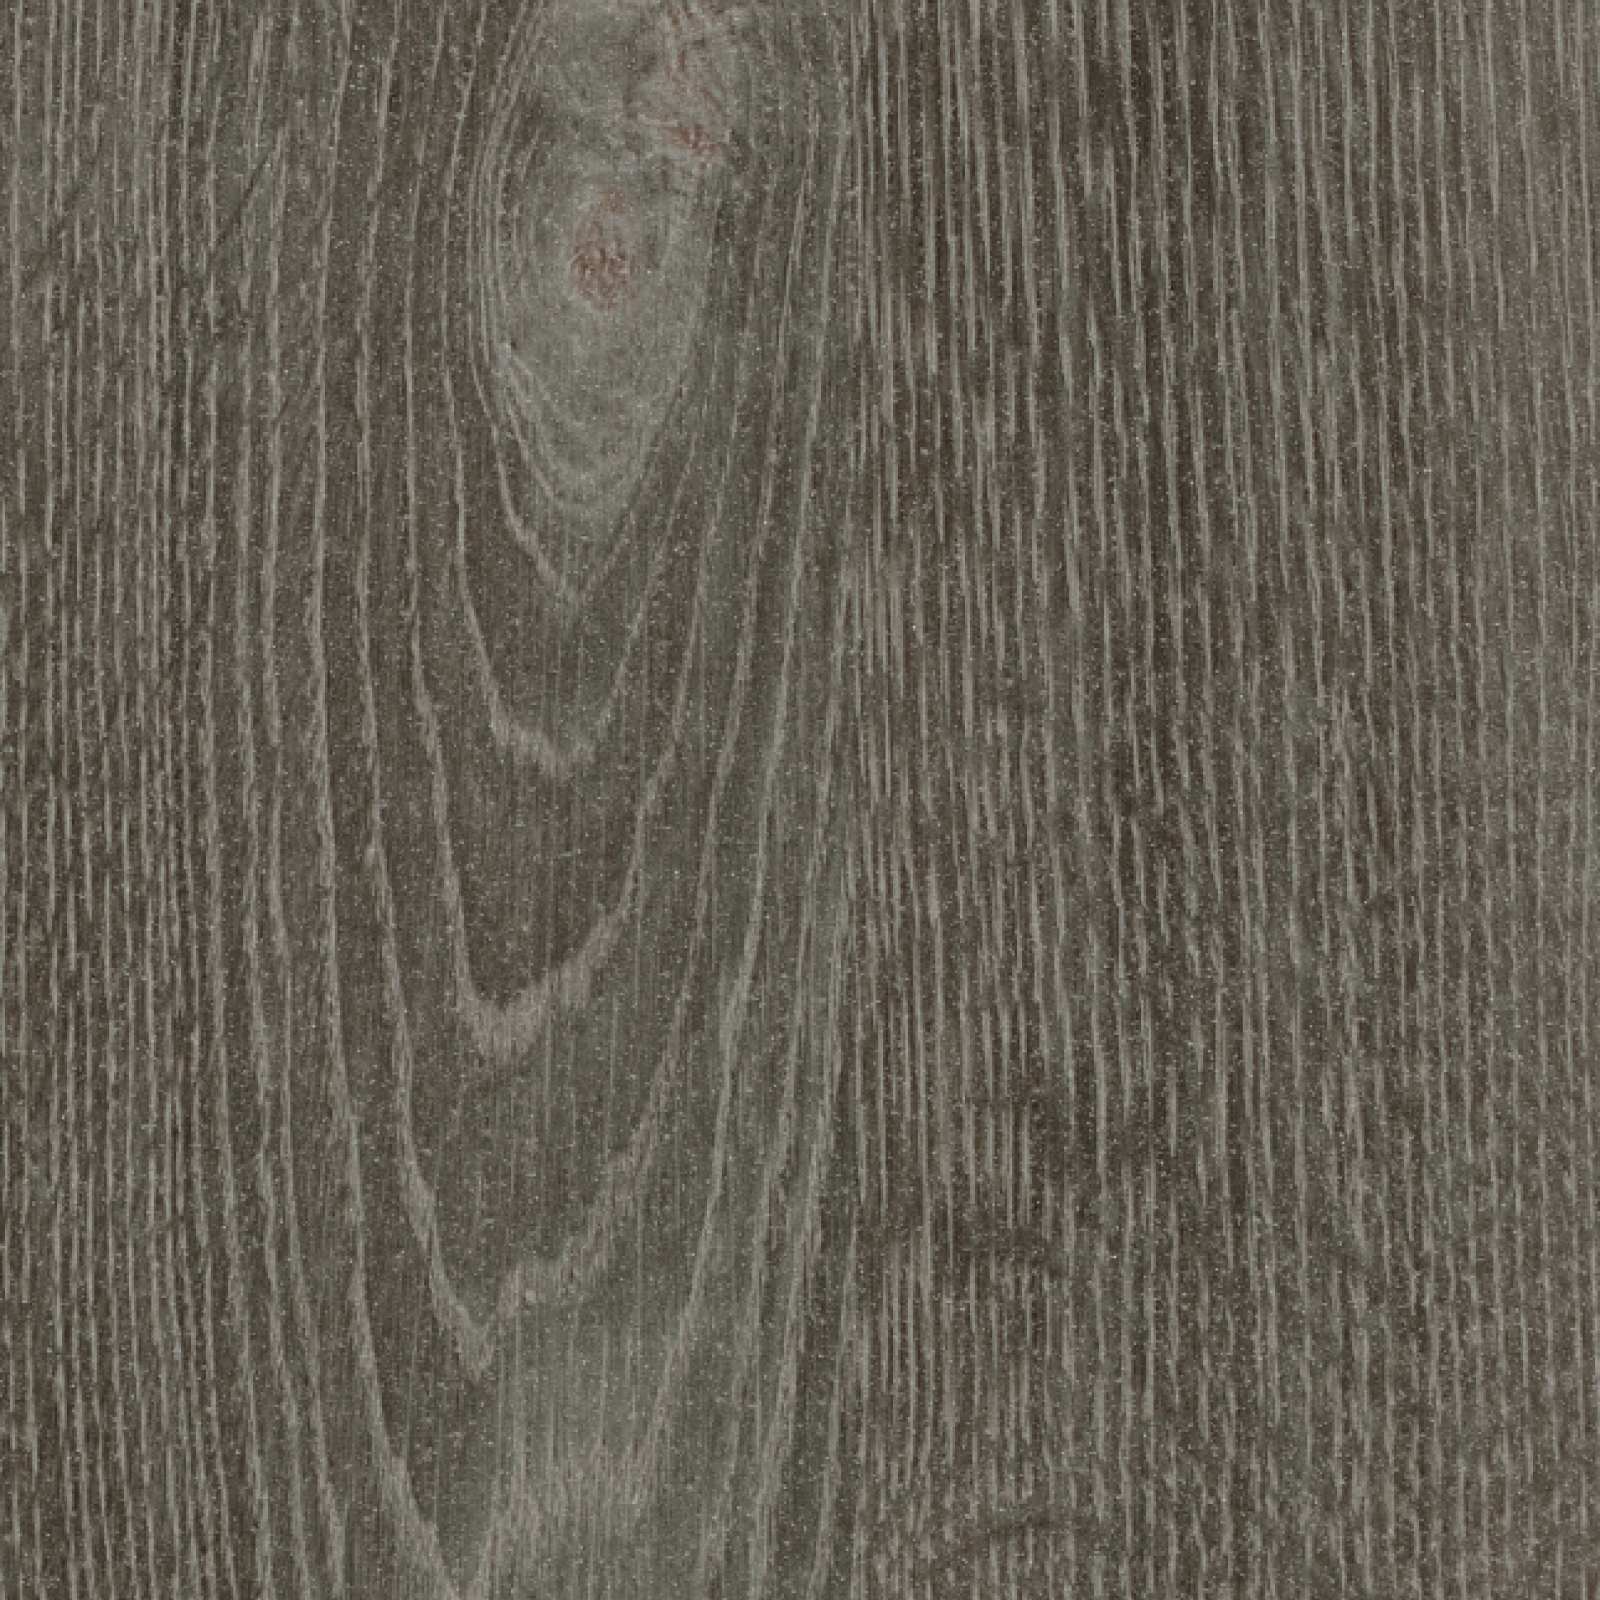 Vzor - 18952 dark grey oak